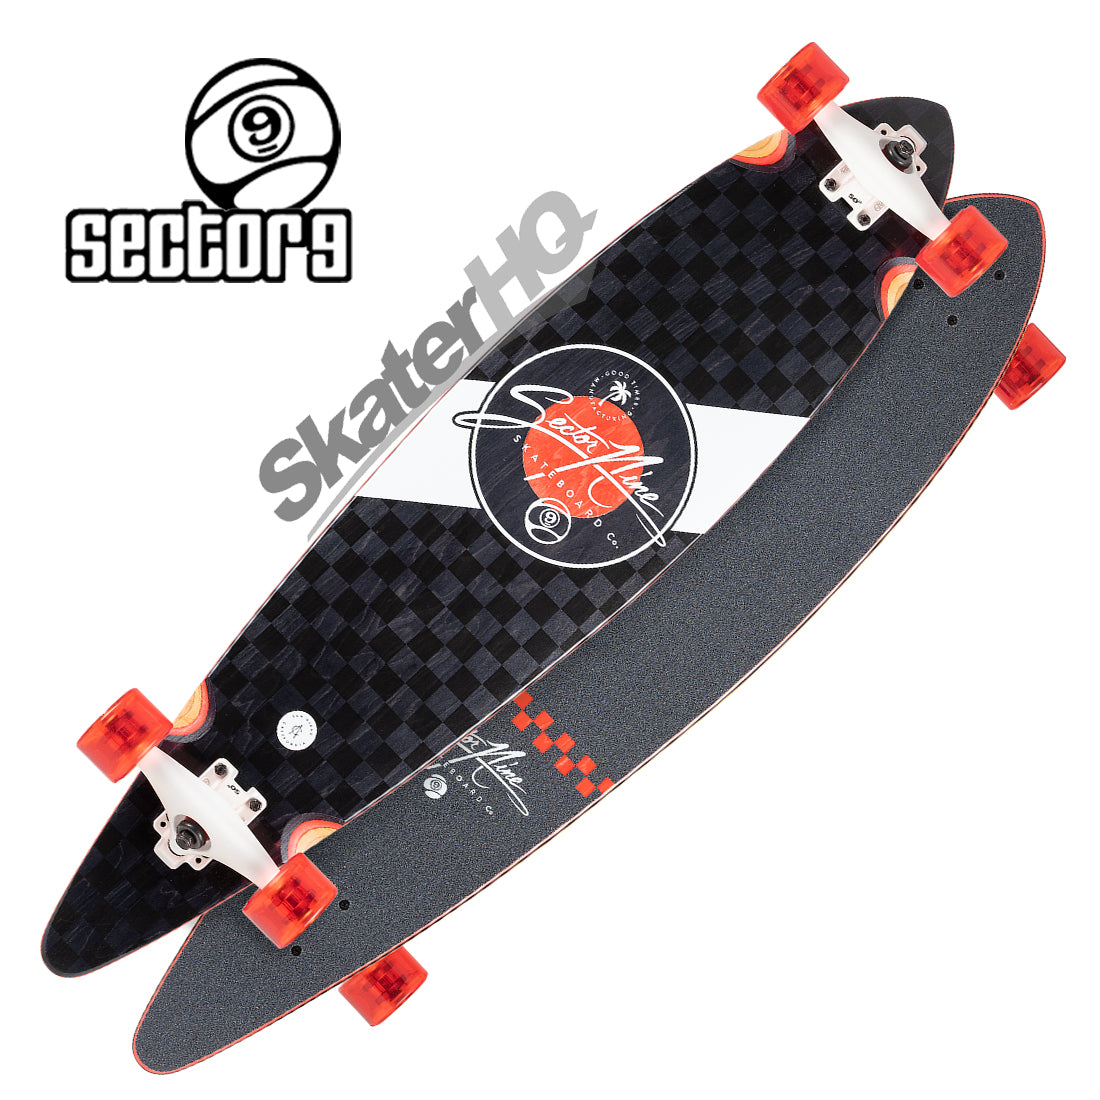 Sector 9 Ledger Mosaic 40 Complete - Black/Red Skateboard Completes Longboards